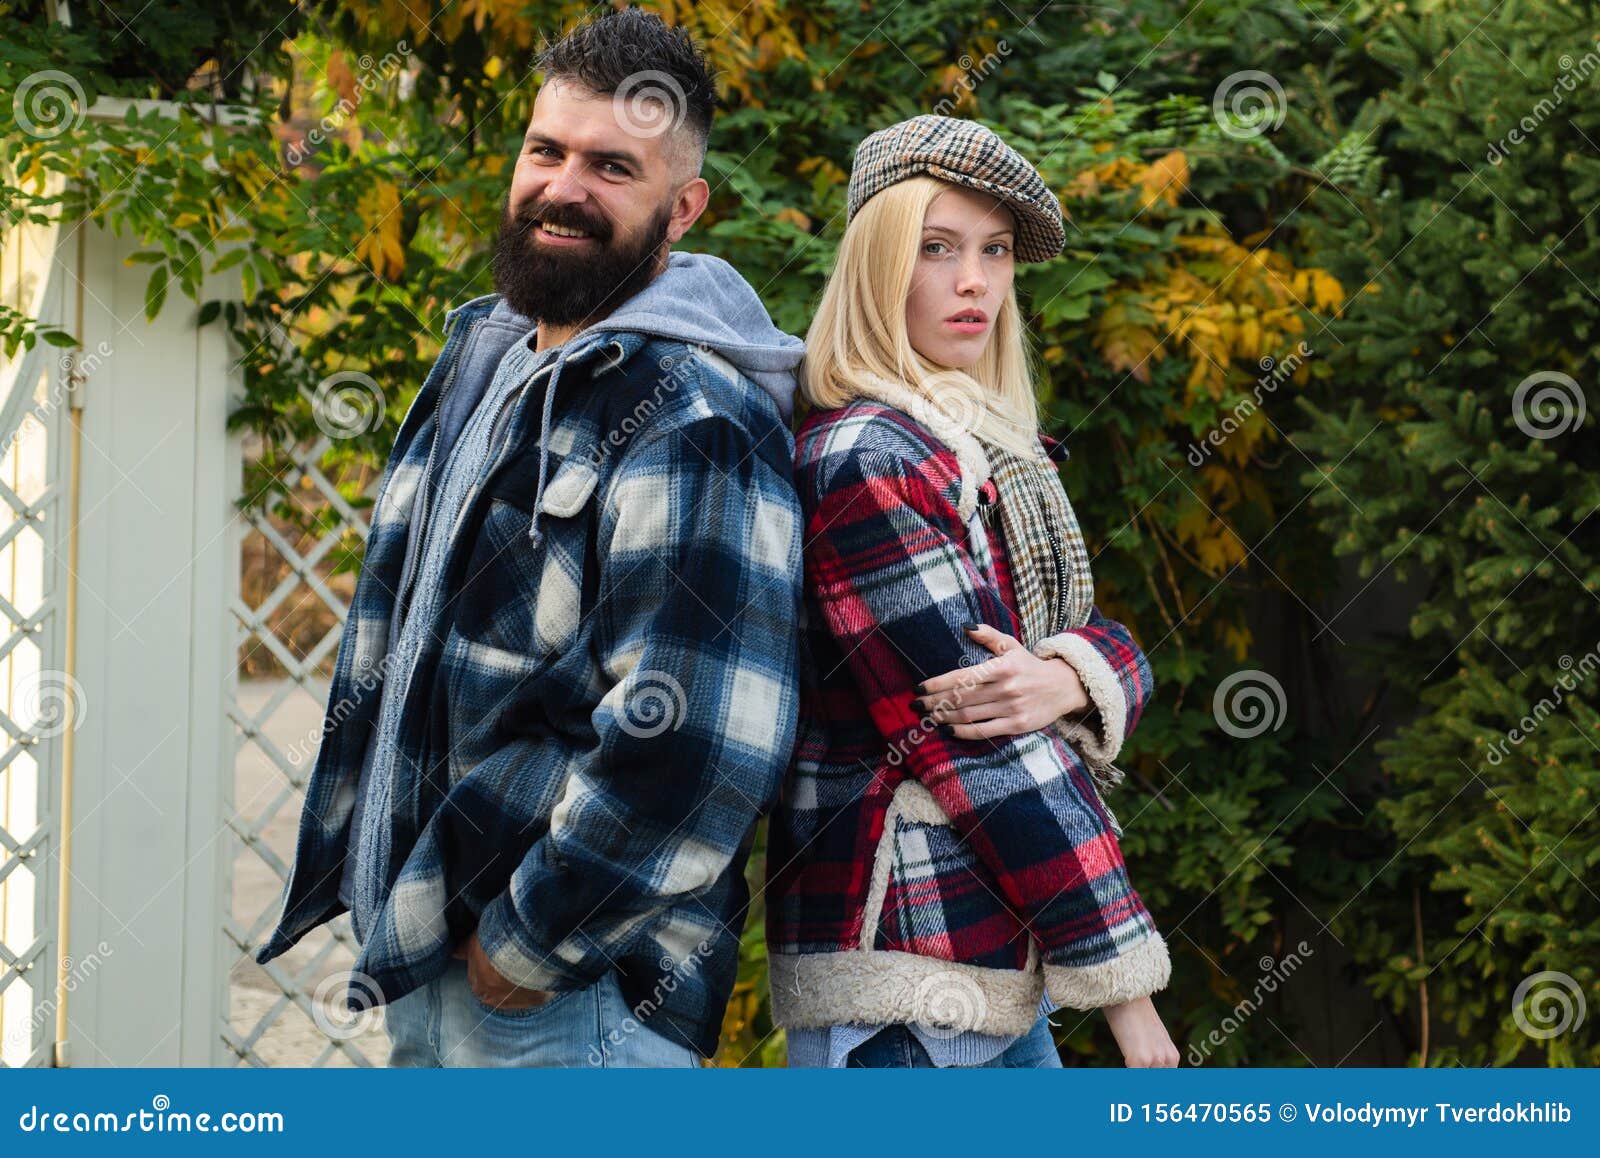 lumberjack dating